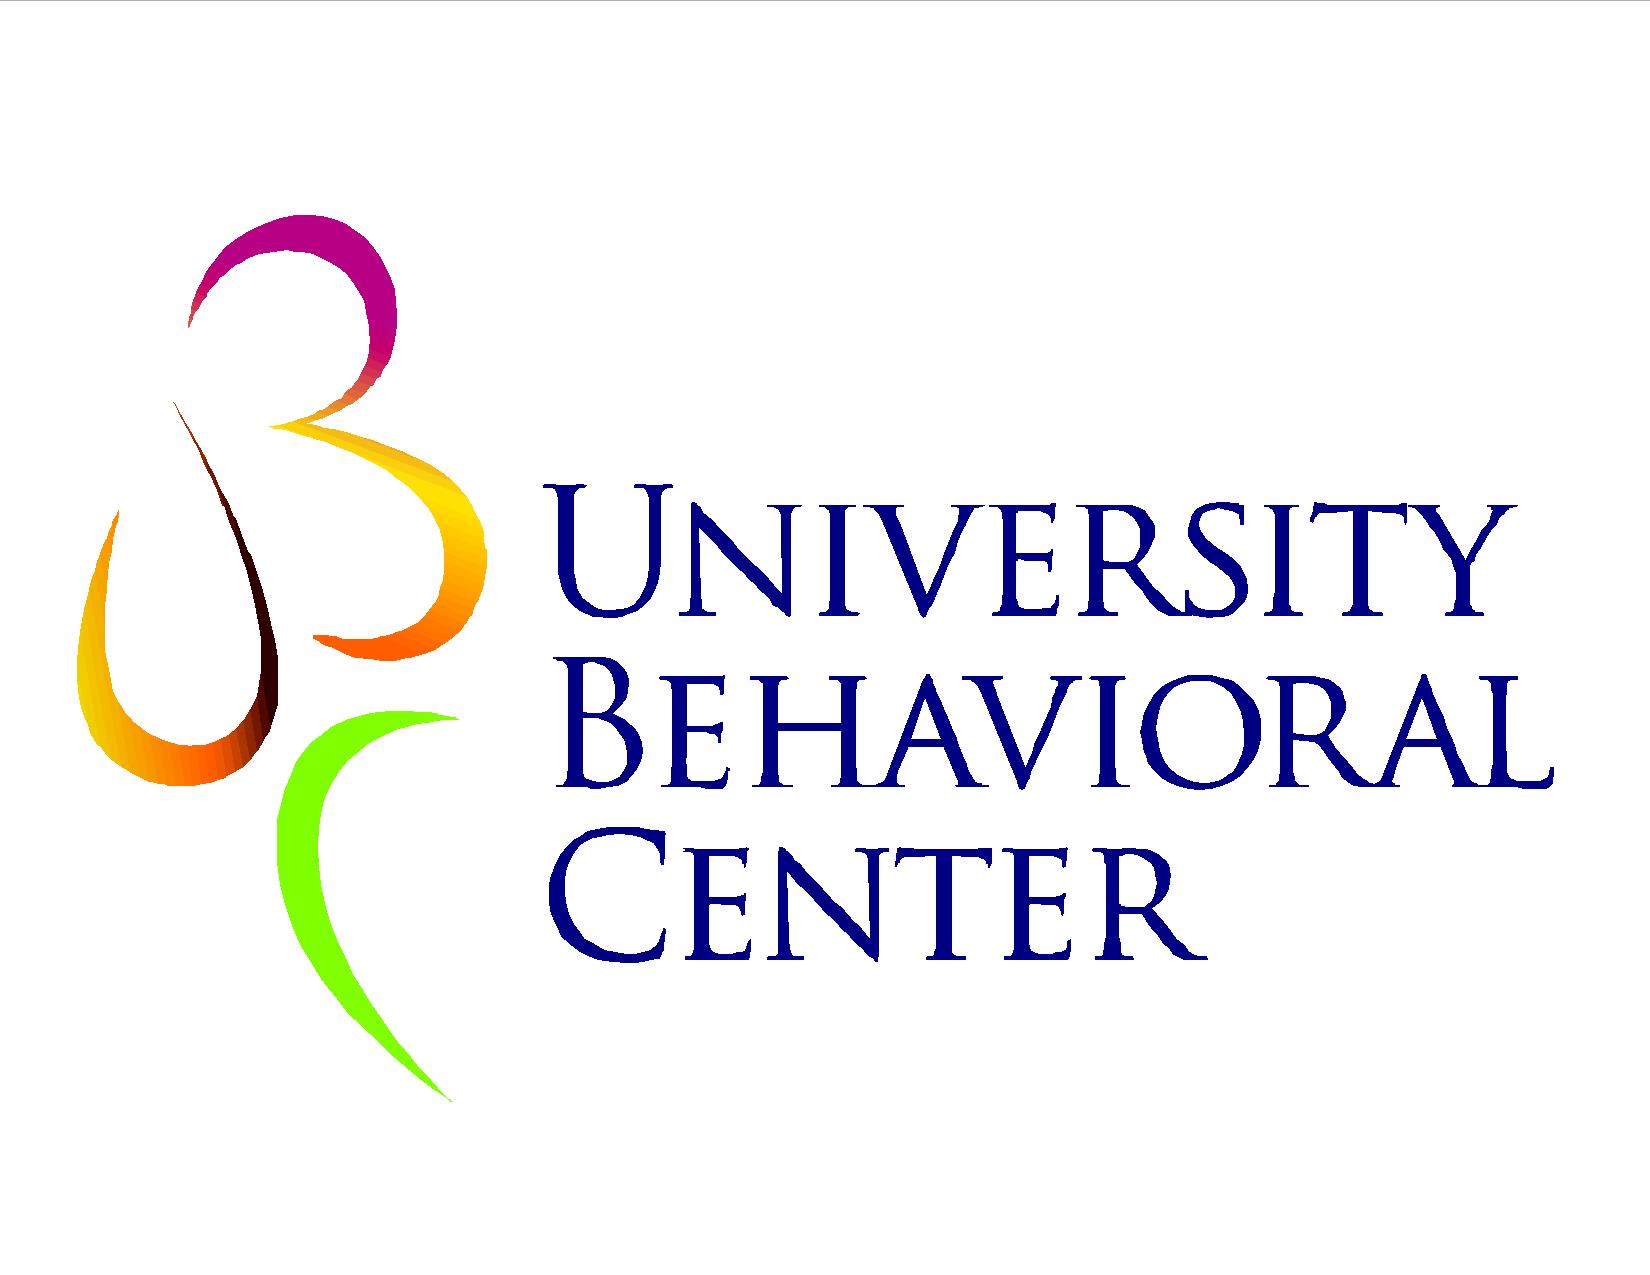 University Behavioral Center